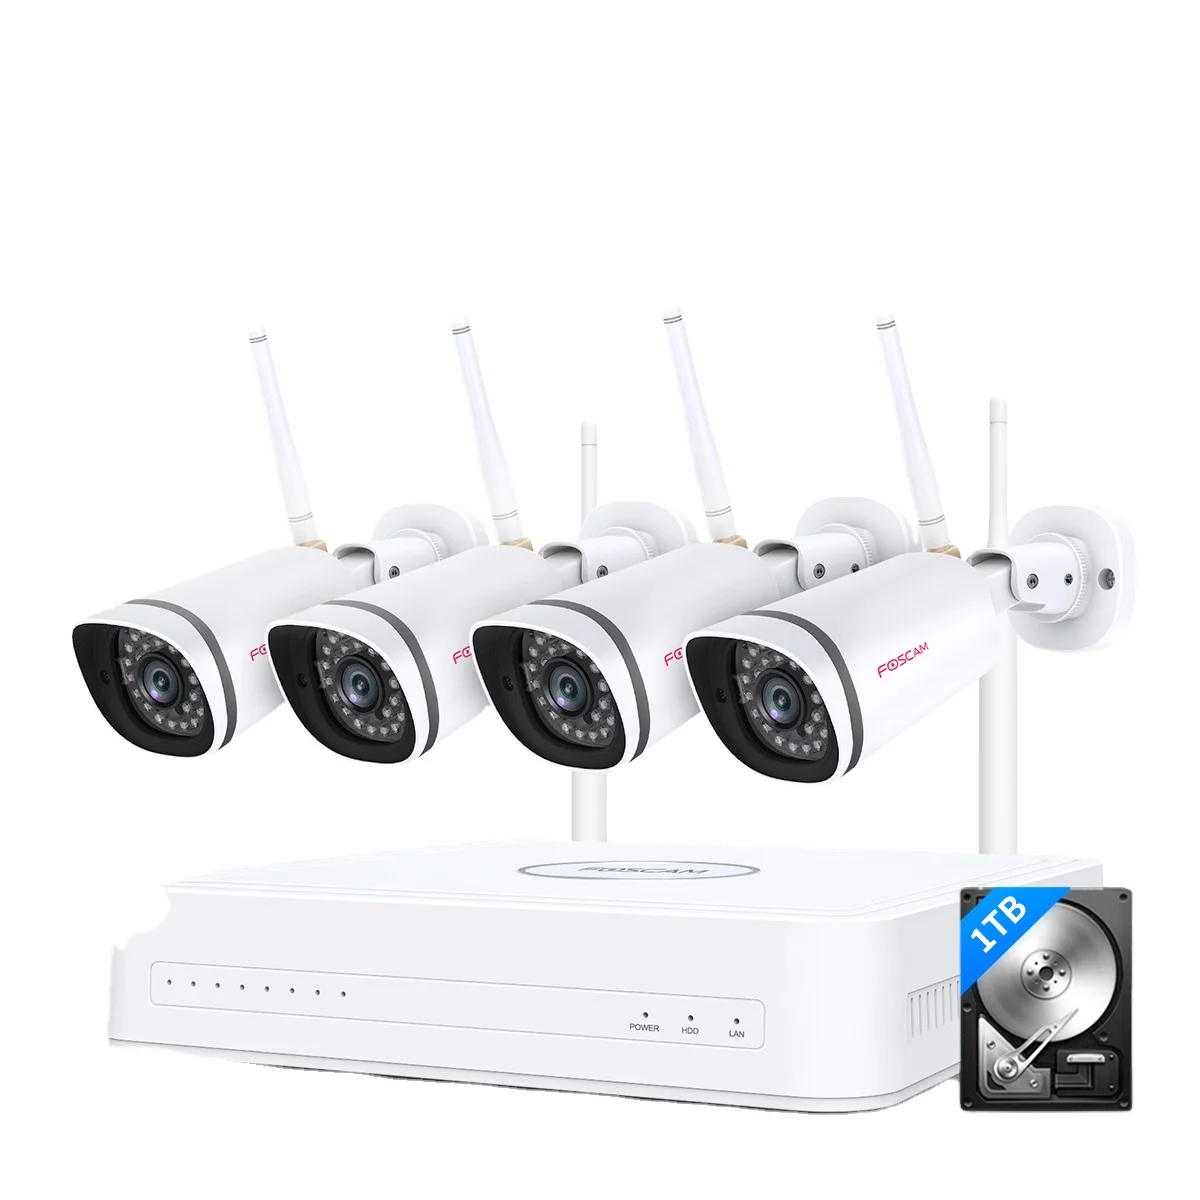 Foscam wireless security camera system 1080p night vision security camera systems